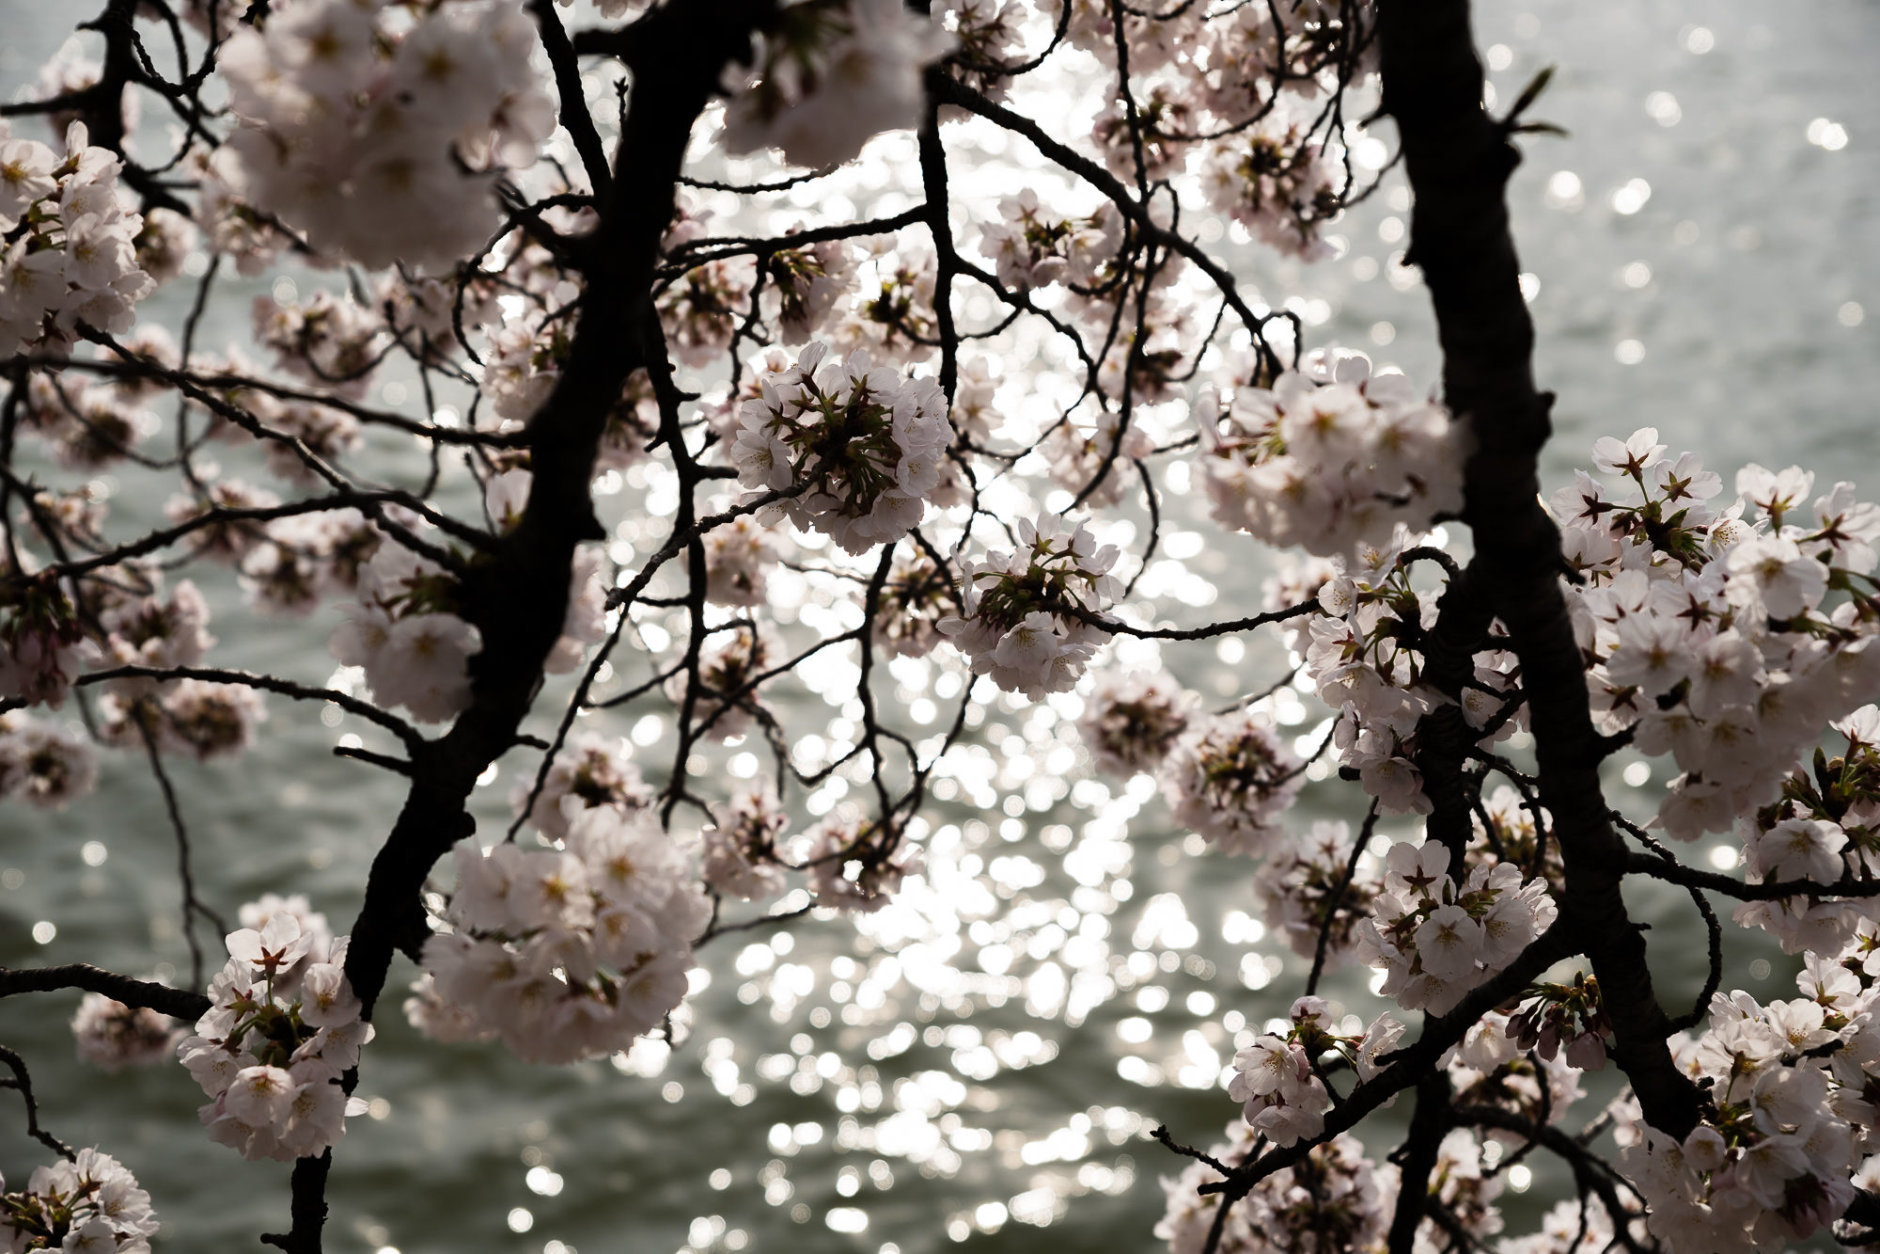 Cherry blossoms are seen over the sun's reflection March 30 on the Tidal Basin. (WTOP/Alejandro Alvarez)